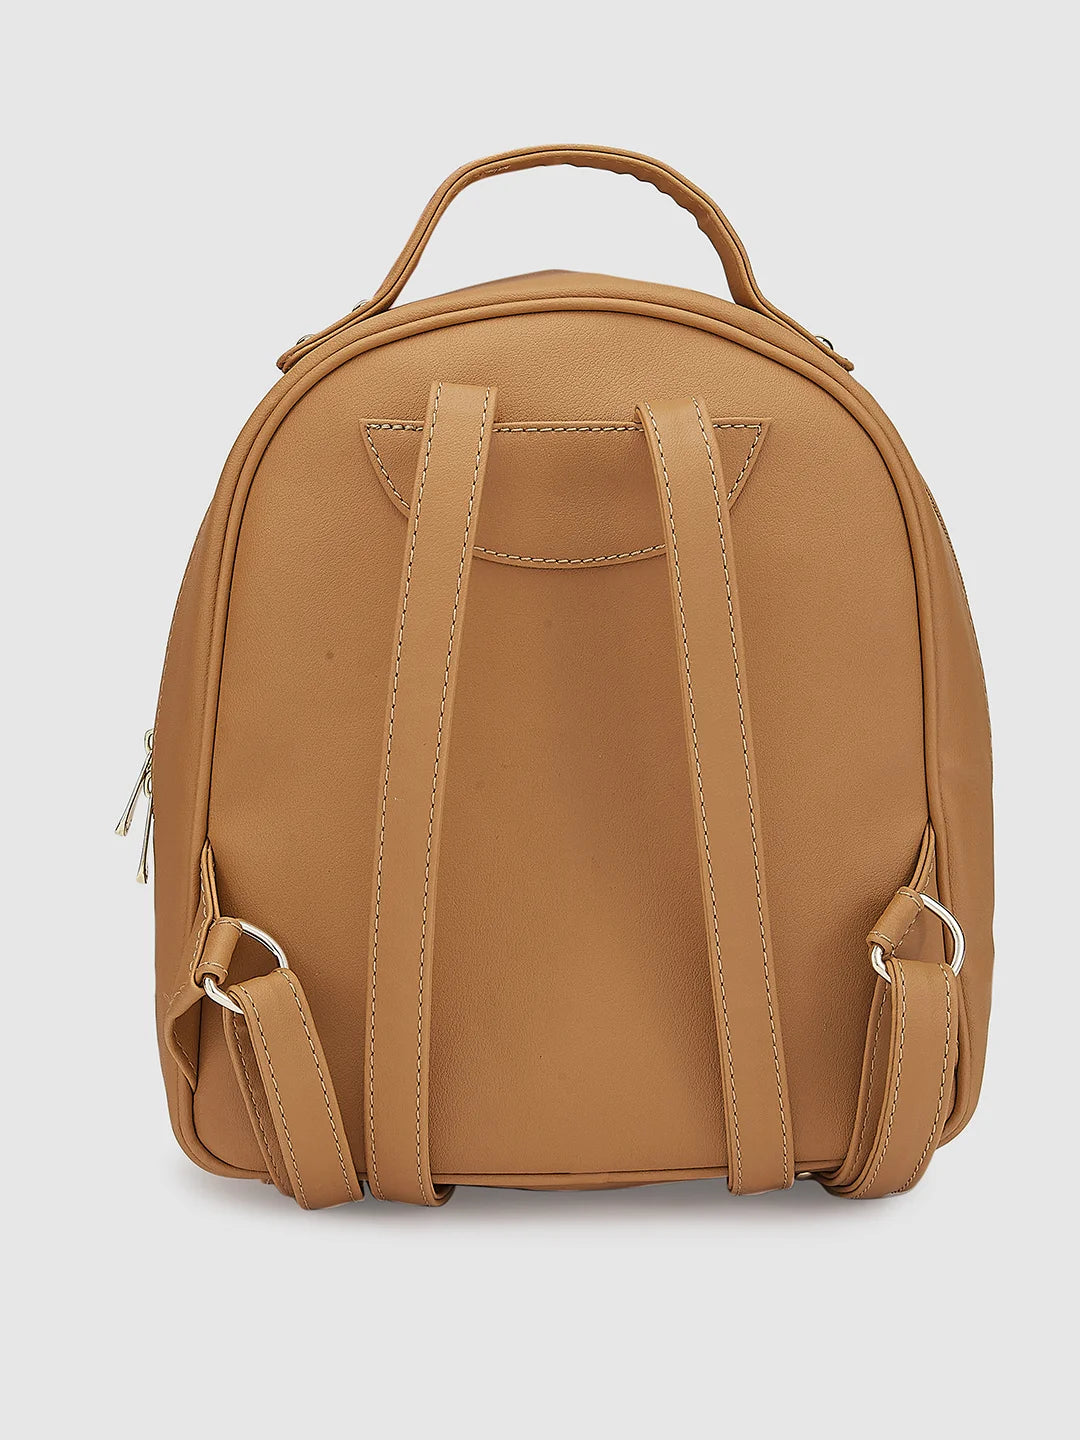 Caprese Tresna Embroidery Backpack Handbag